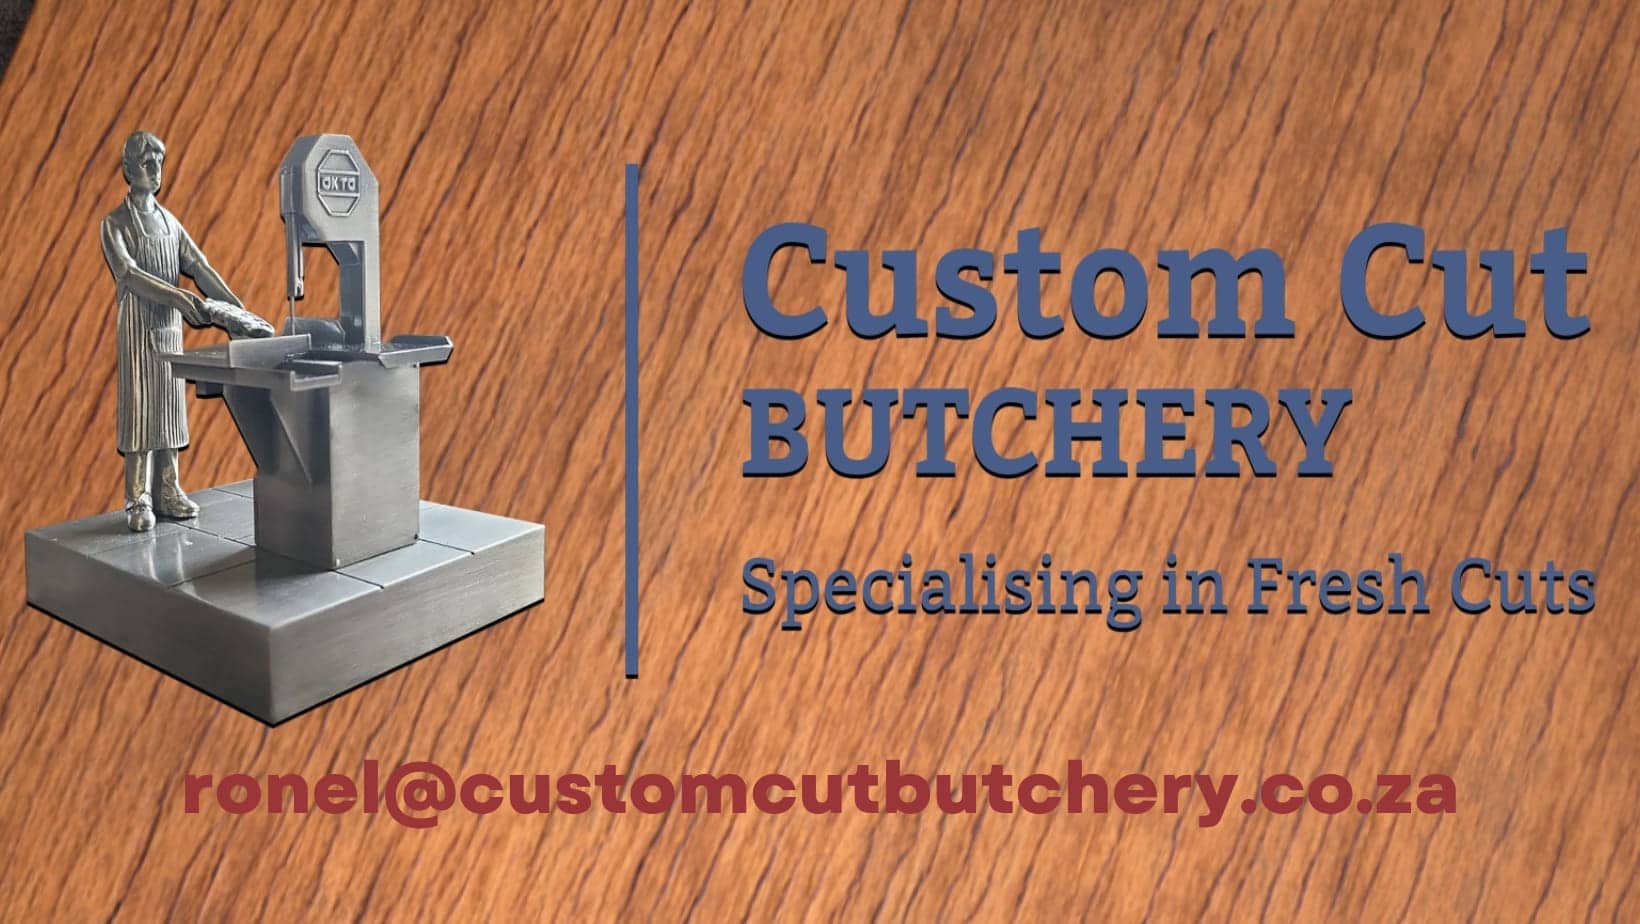 Custom Cut Butchery Vanderbijlpark 5